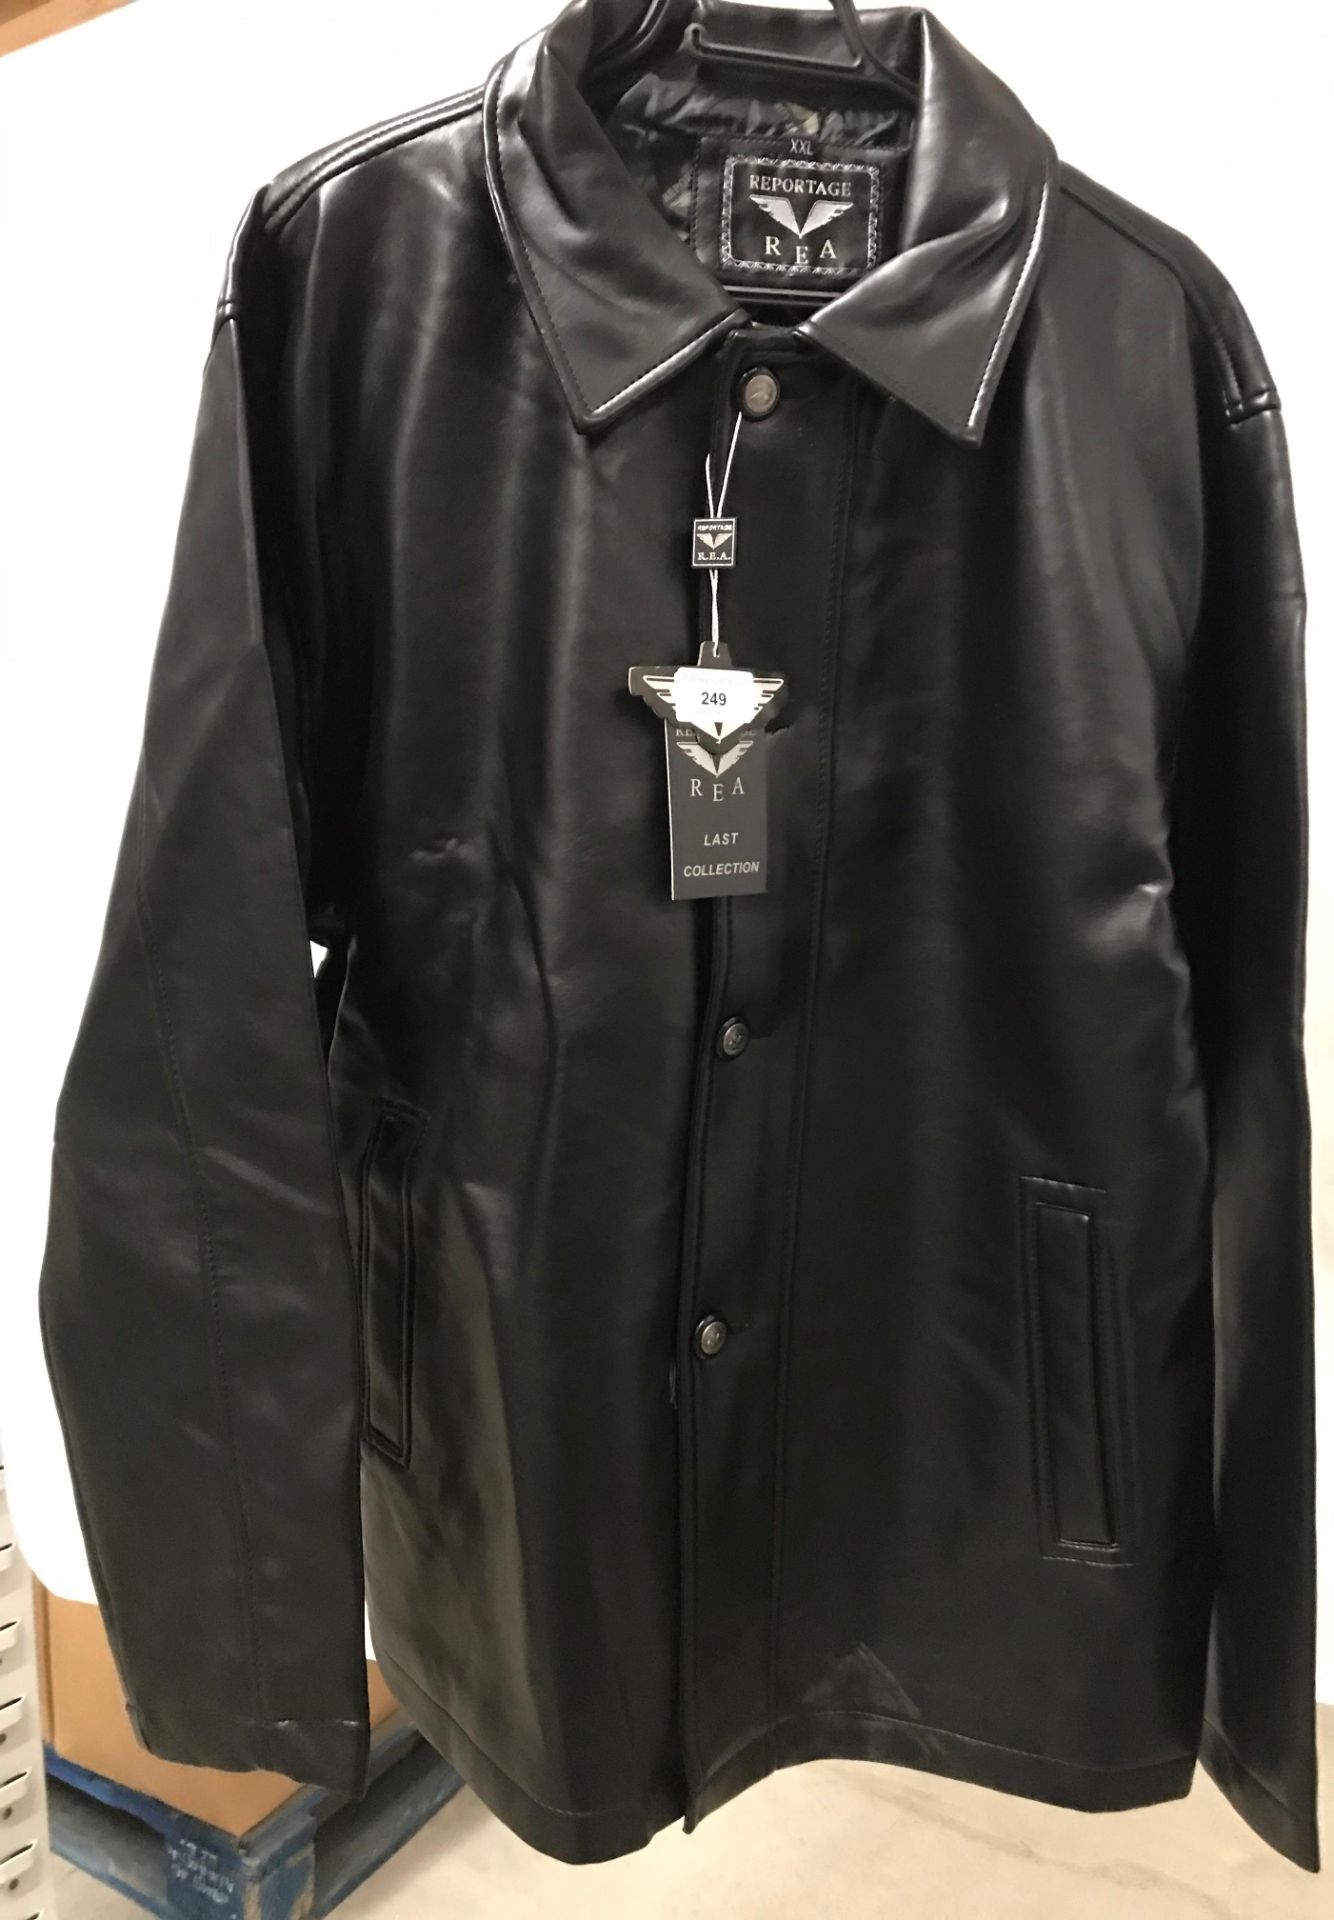 A Reportage RCA men's black leather coat (size XXL)